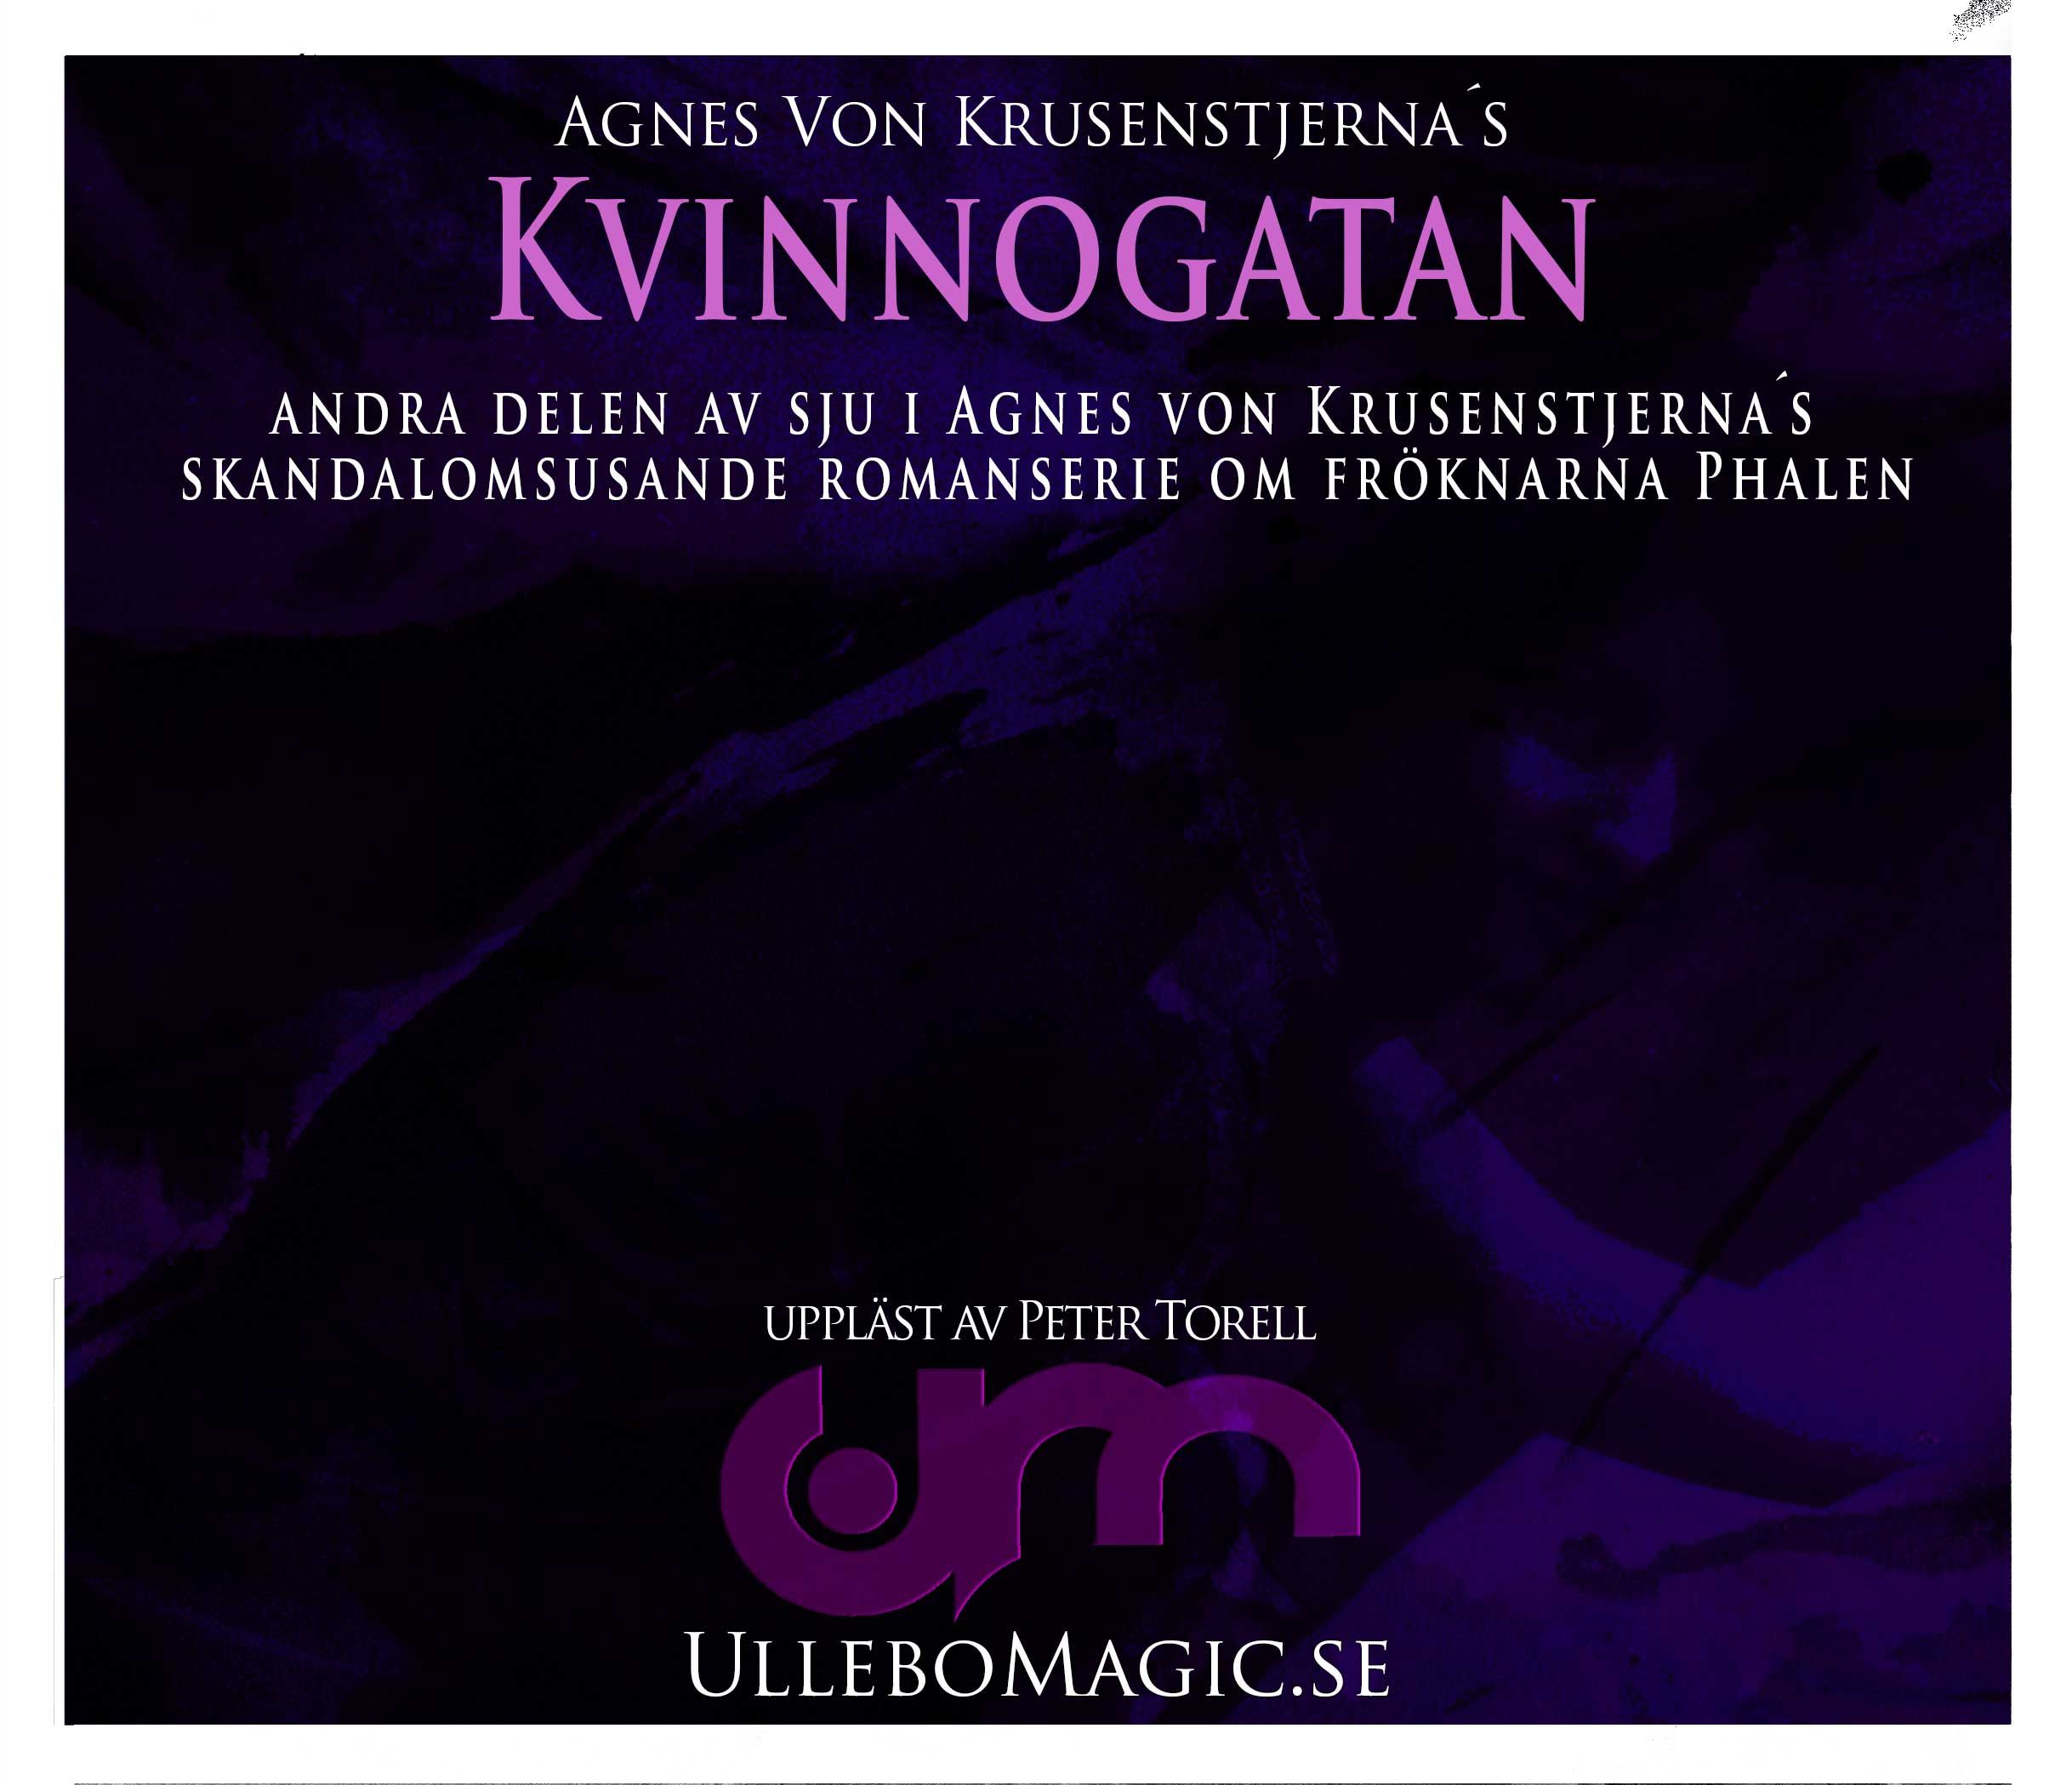 Kvinnogatan, audiobook by Agnes von Krusenstjerna